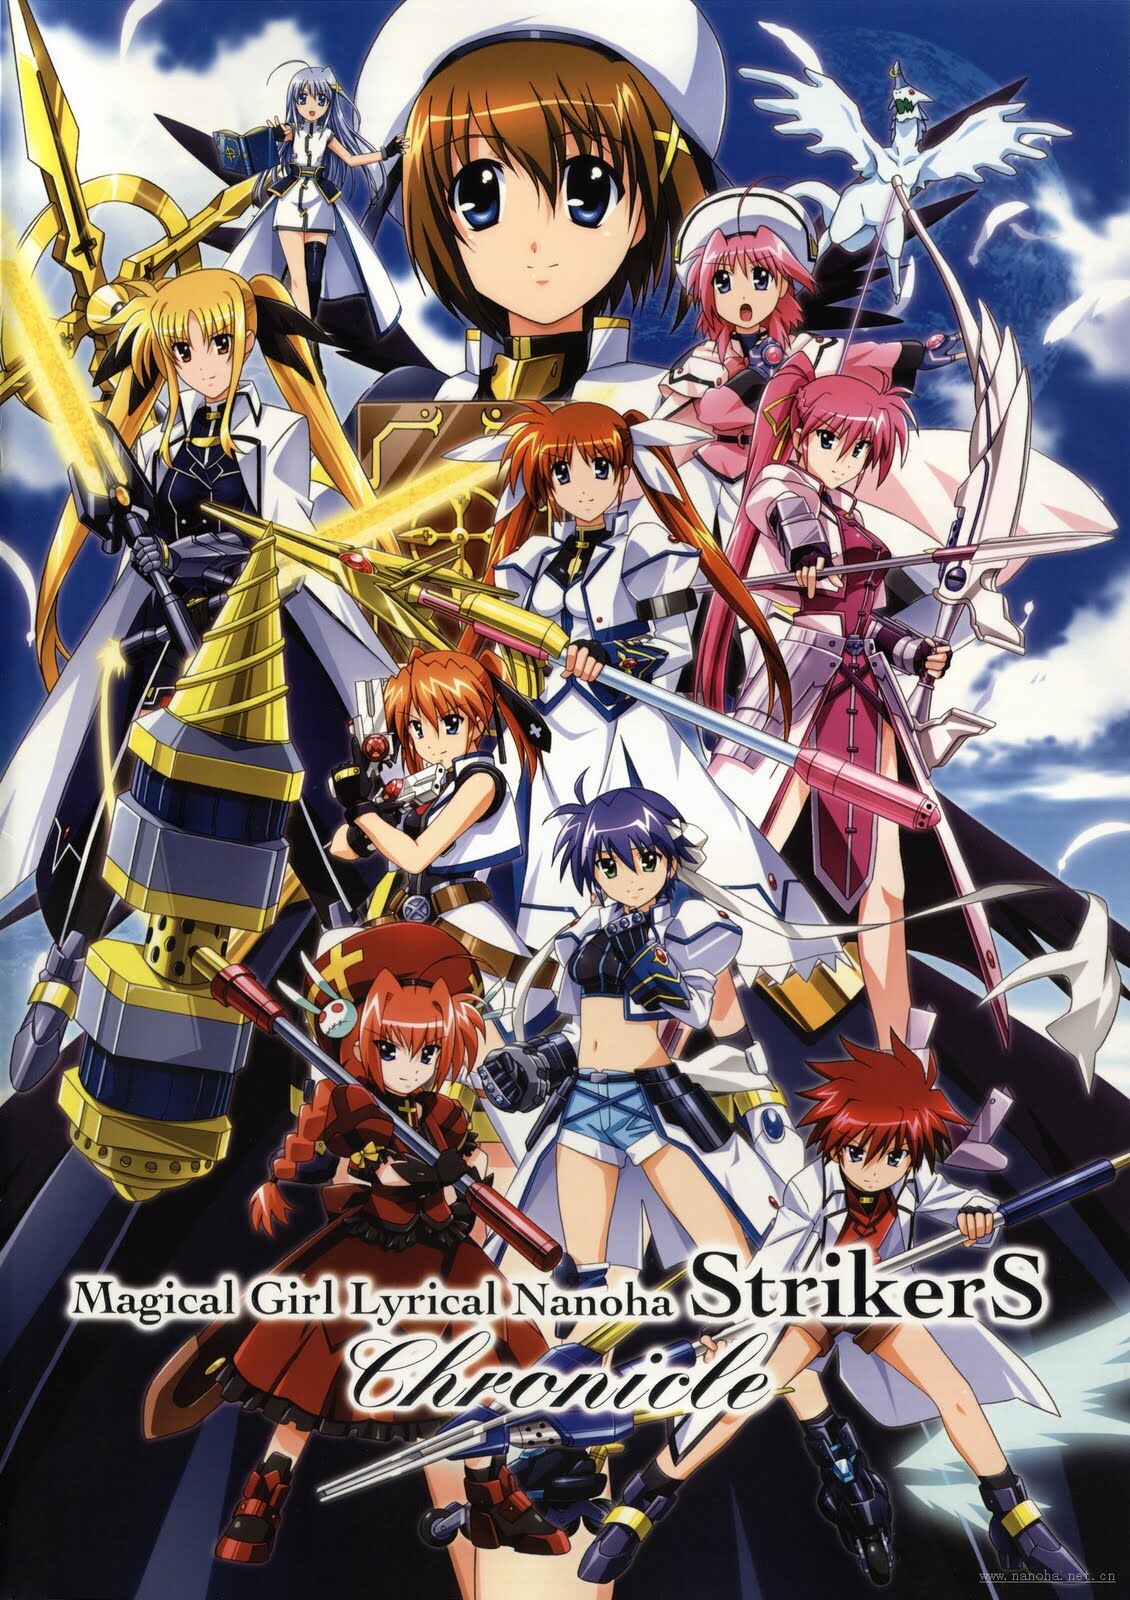 Magical Girl Lyrical Nanoha Strikers Anime And Manga Universe Wiki Fandom